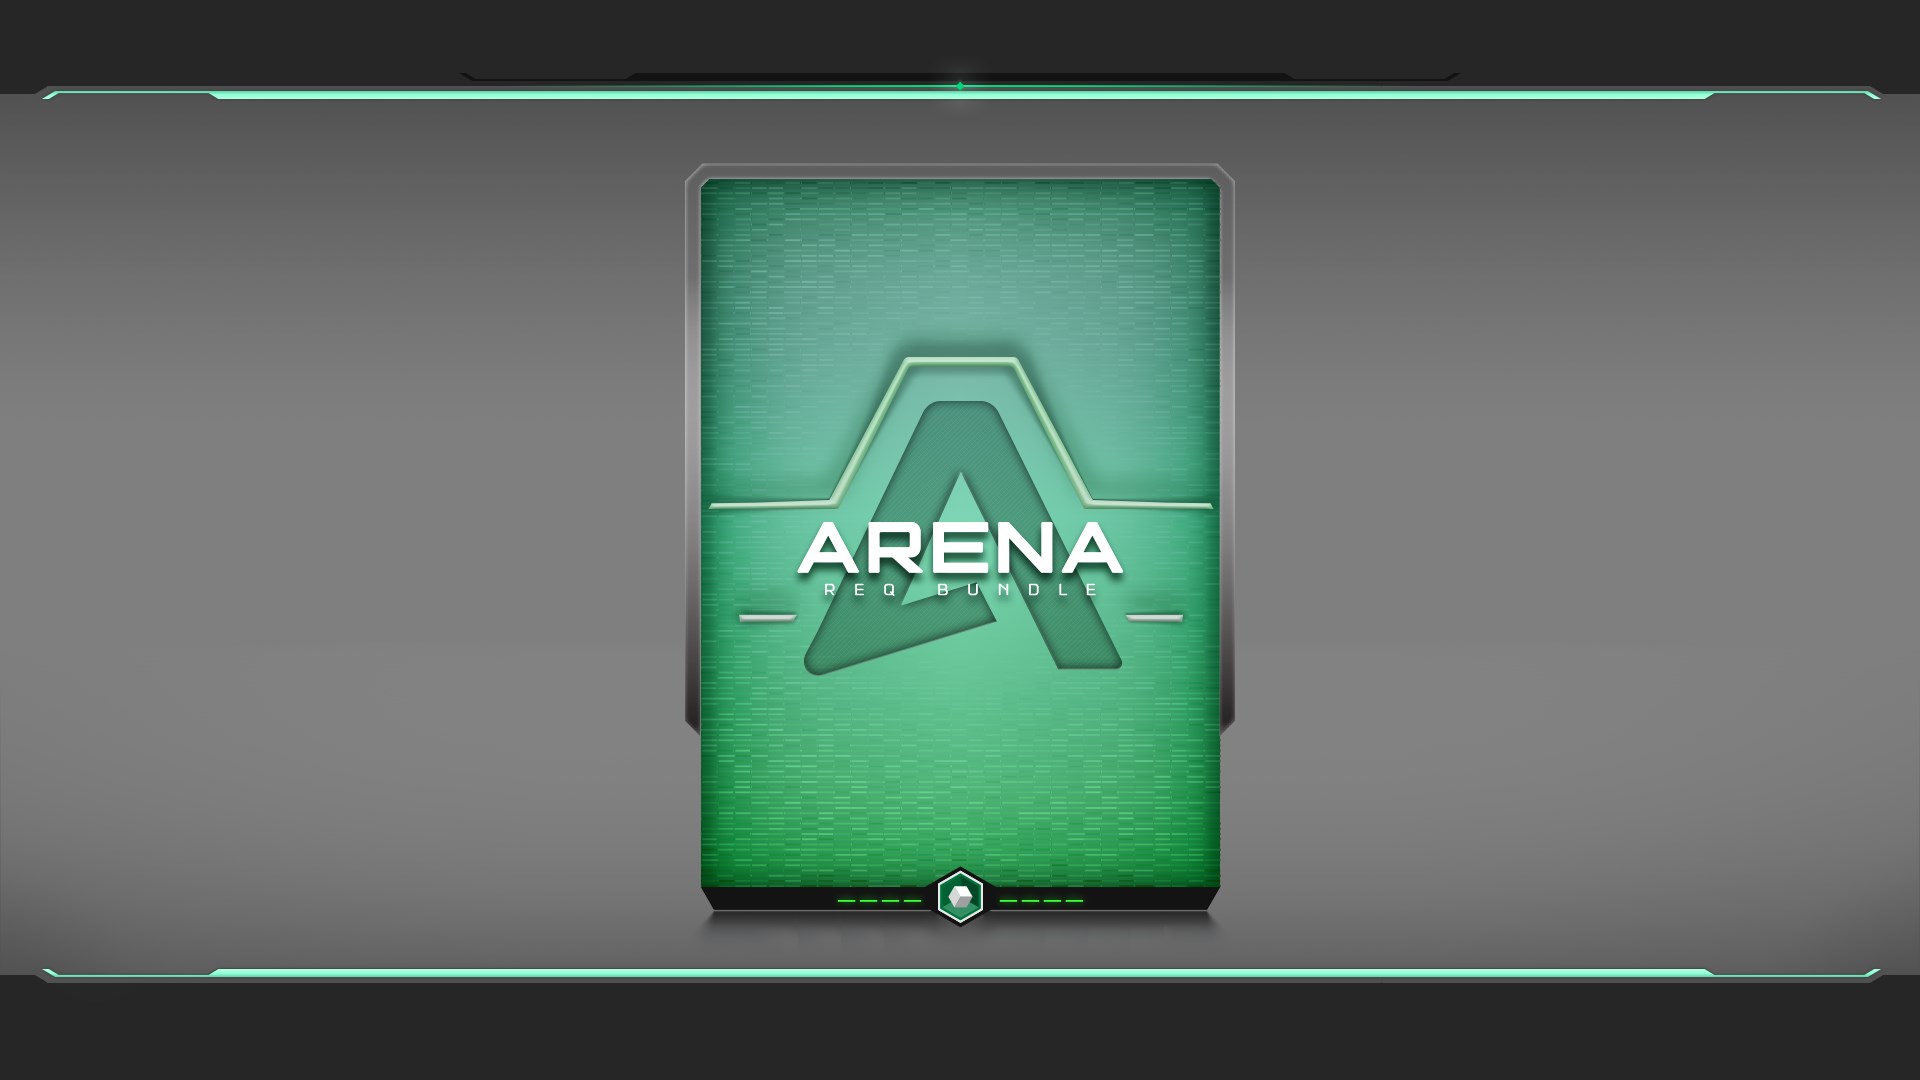 Halo 5 Guardians - Arena REQ Bundle DLC EU XBOX One CD Key, $26.55